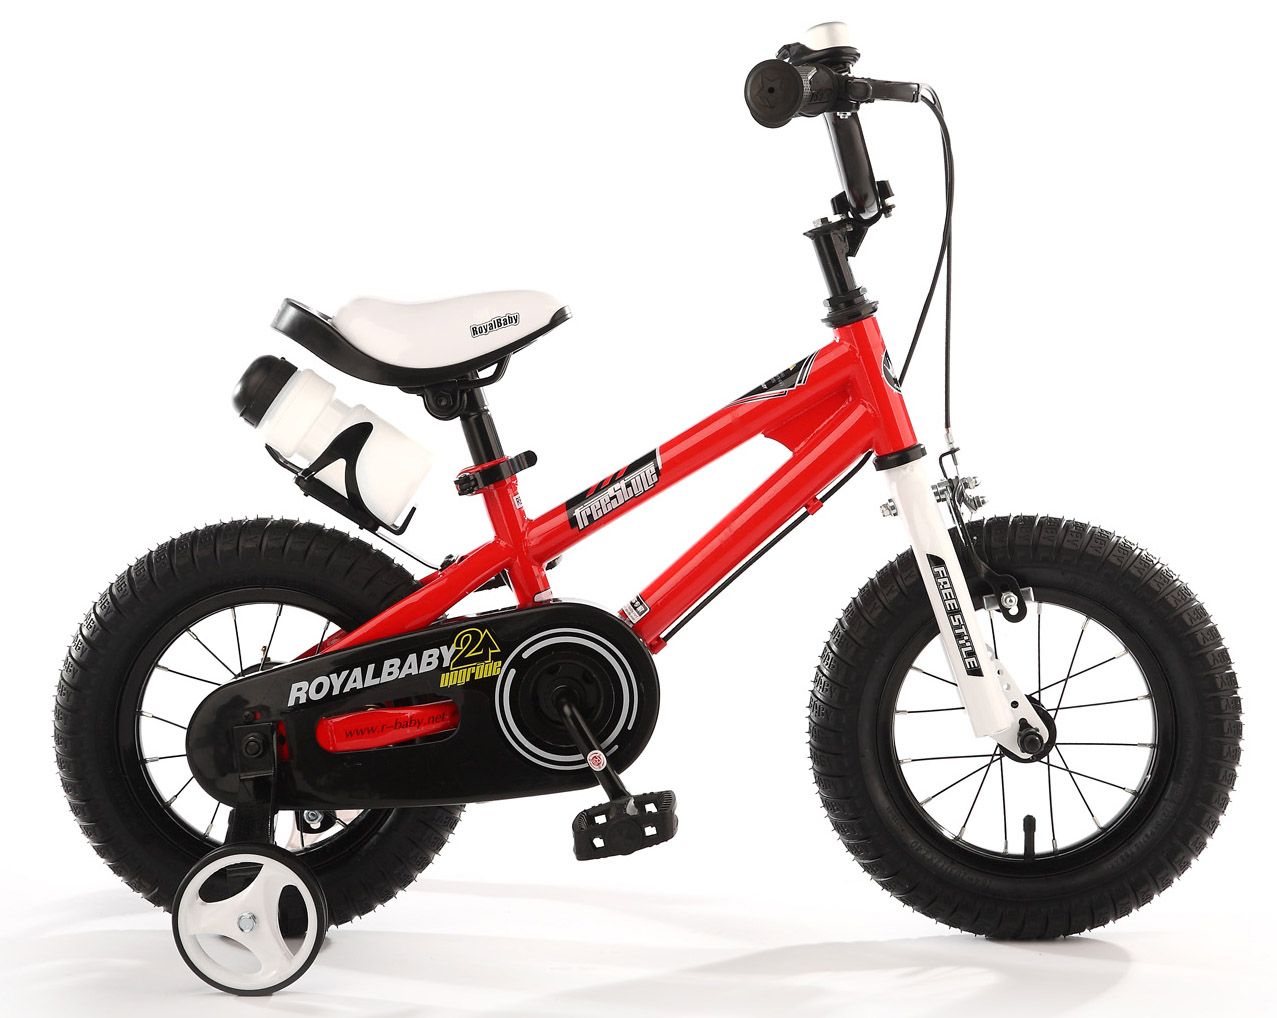  Отзывы о Детском велосипеде Royal Baby Freestyle Steel 14" (2020) 2020